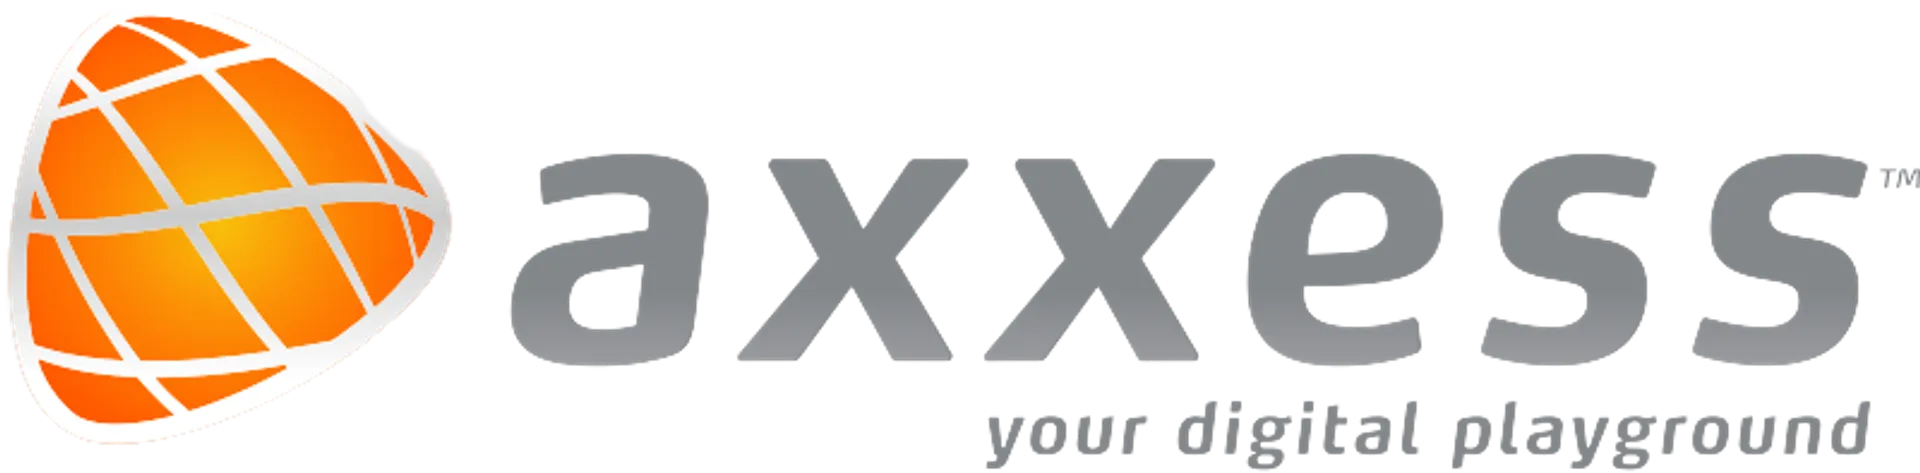 AXXESS logo